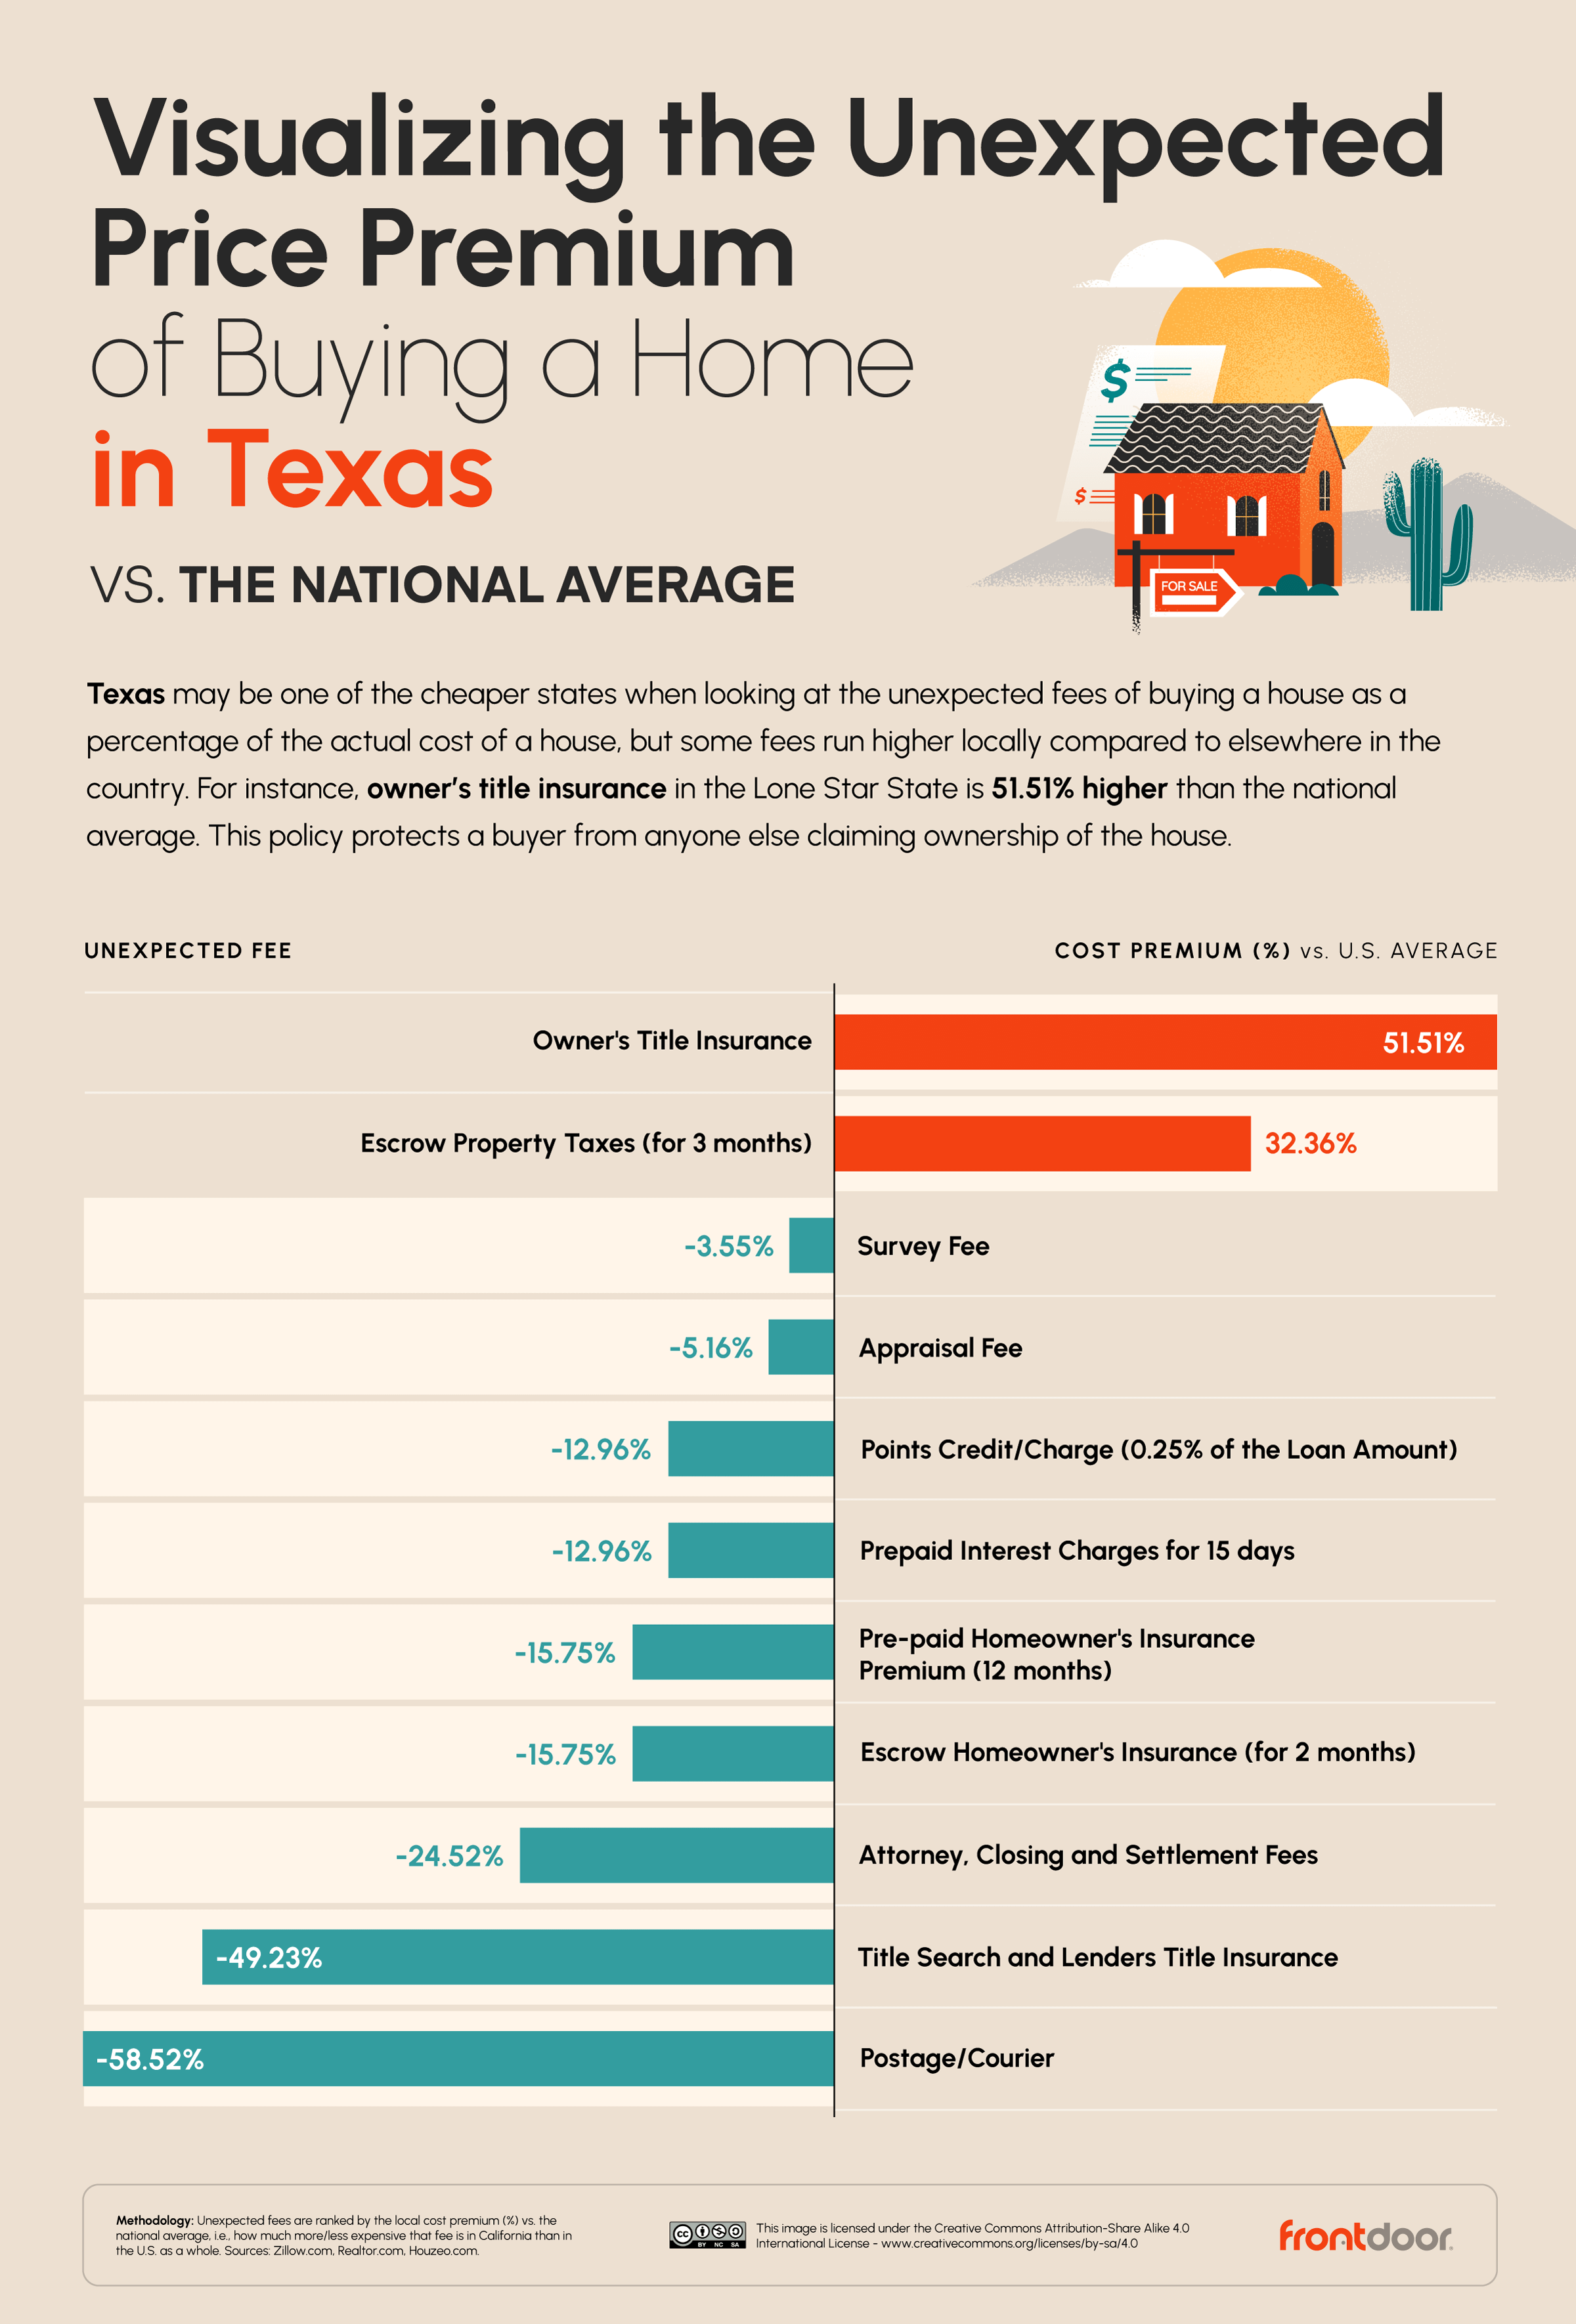  Most Unexpected Hidden Home Buyer Fees in Texas